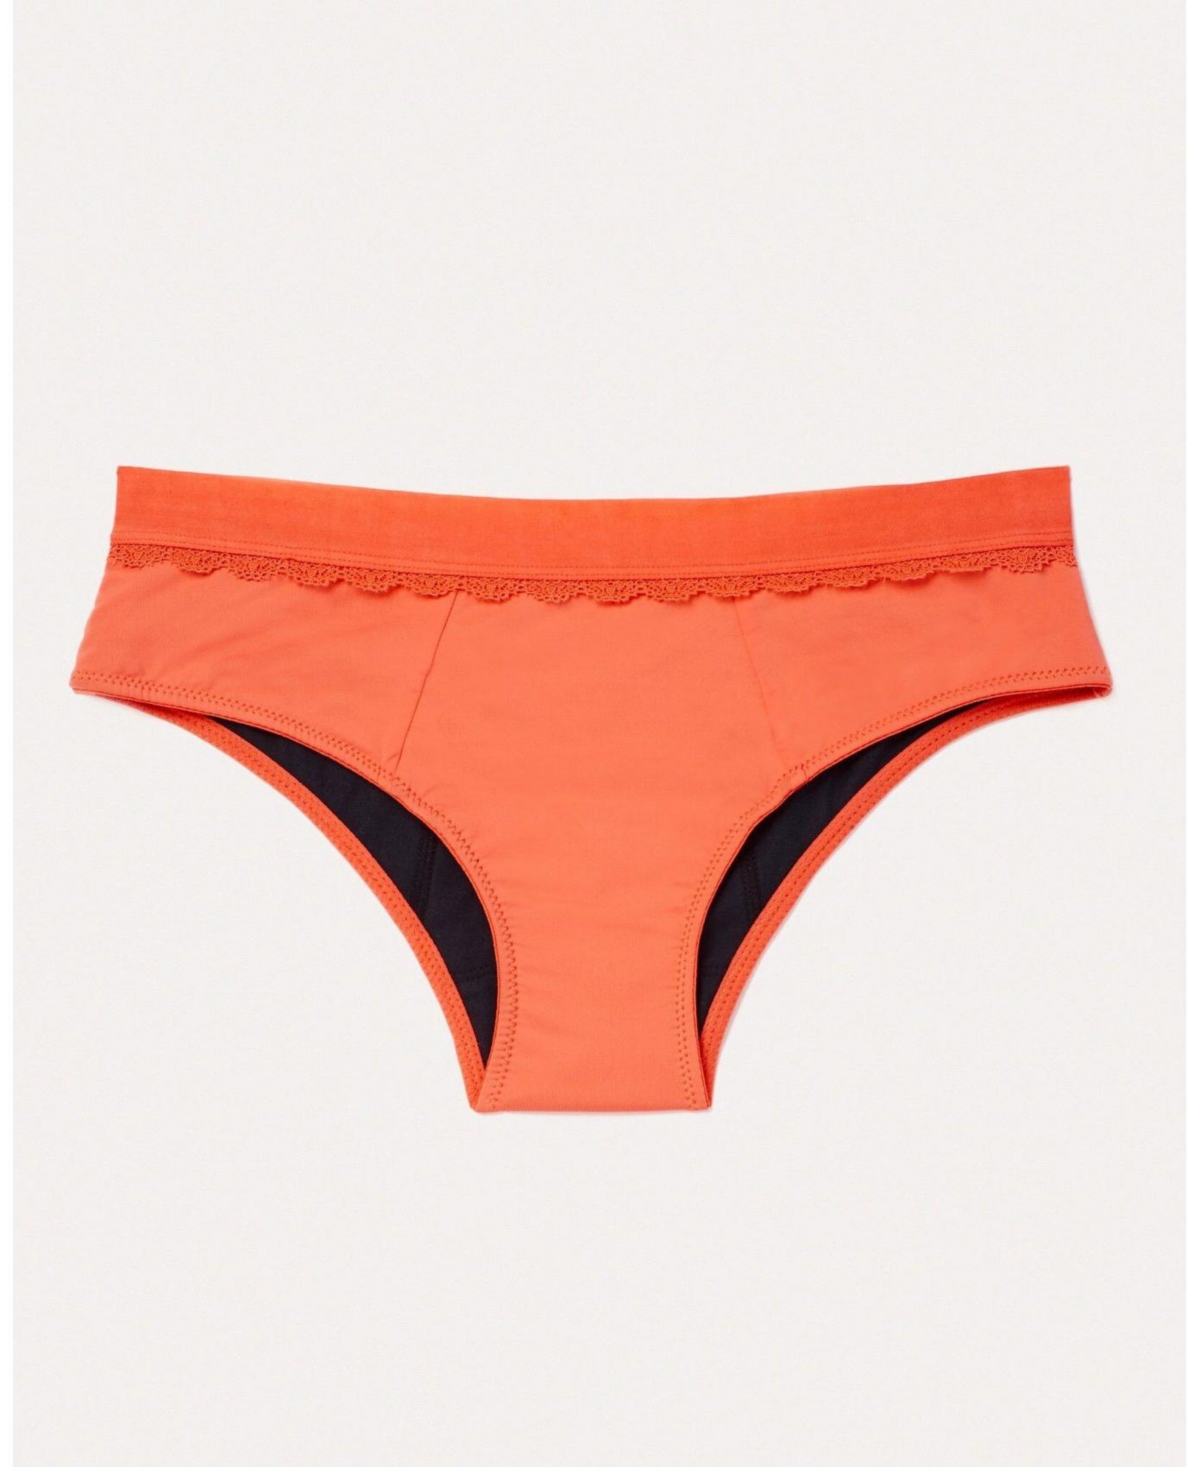 Cindy Women's Plus-Size Cheeky Period-Proof Panty - Medium orange